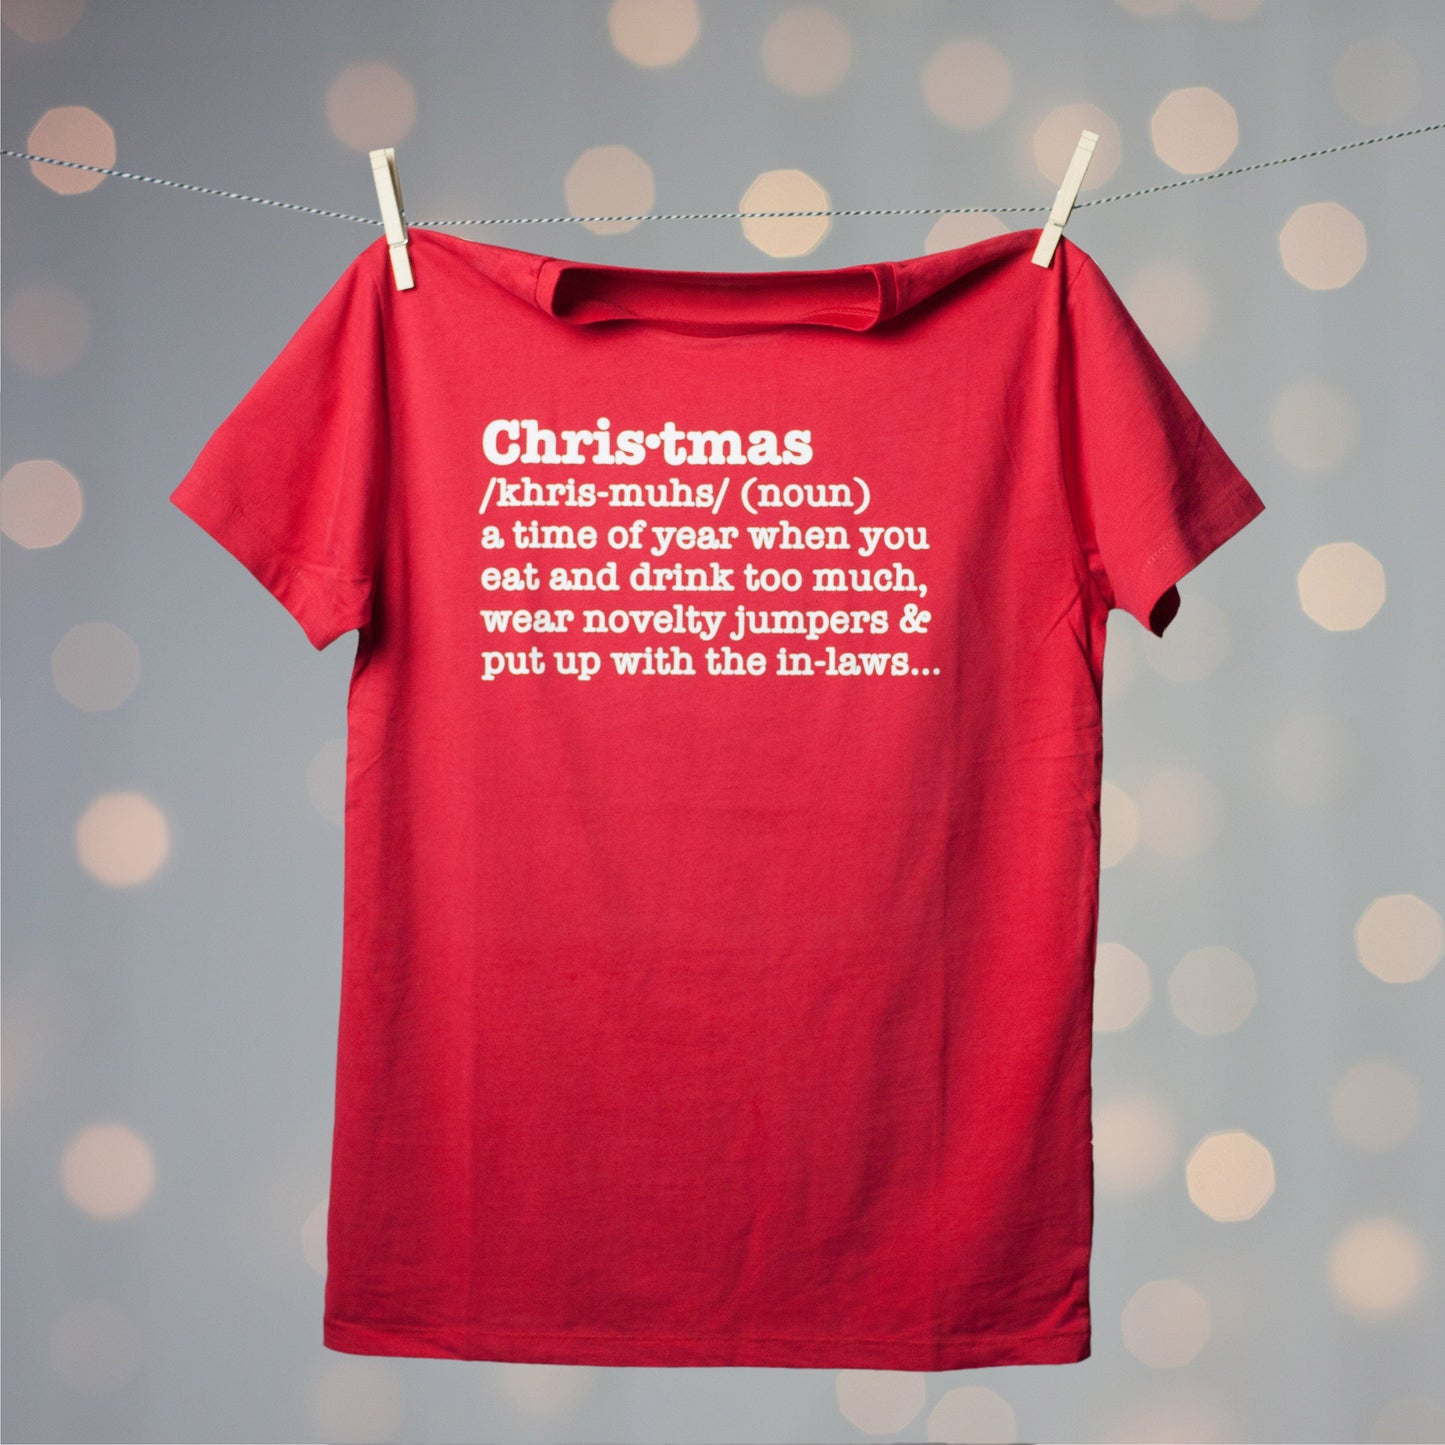 Christmas Definition shirt, Christmas funny dad shirt or unisex t shirt